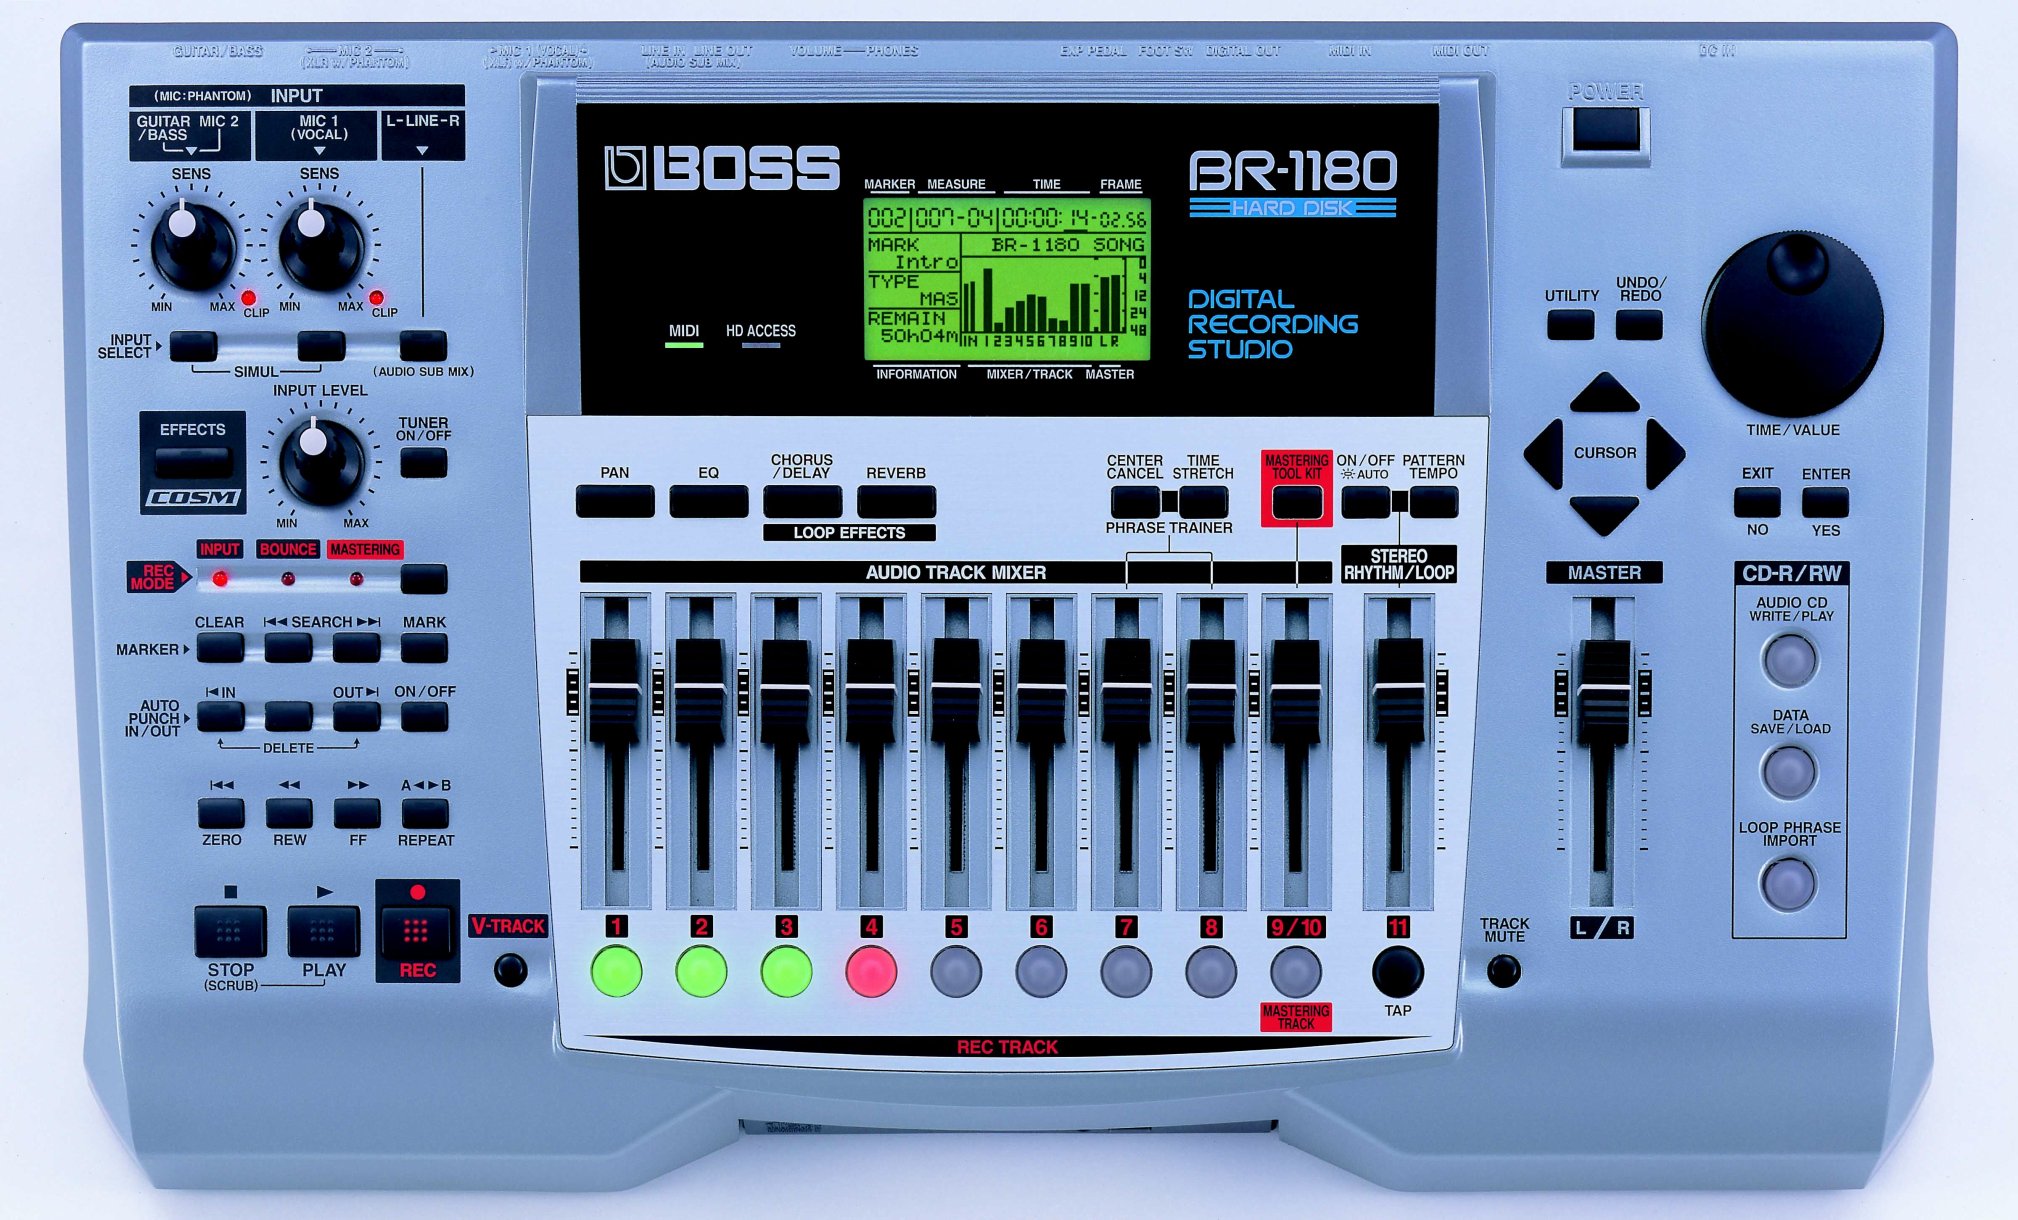 BR-1180/1180CD Digital Recording Studio Boss - Audiofanzine